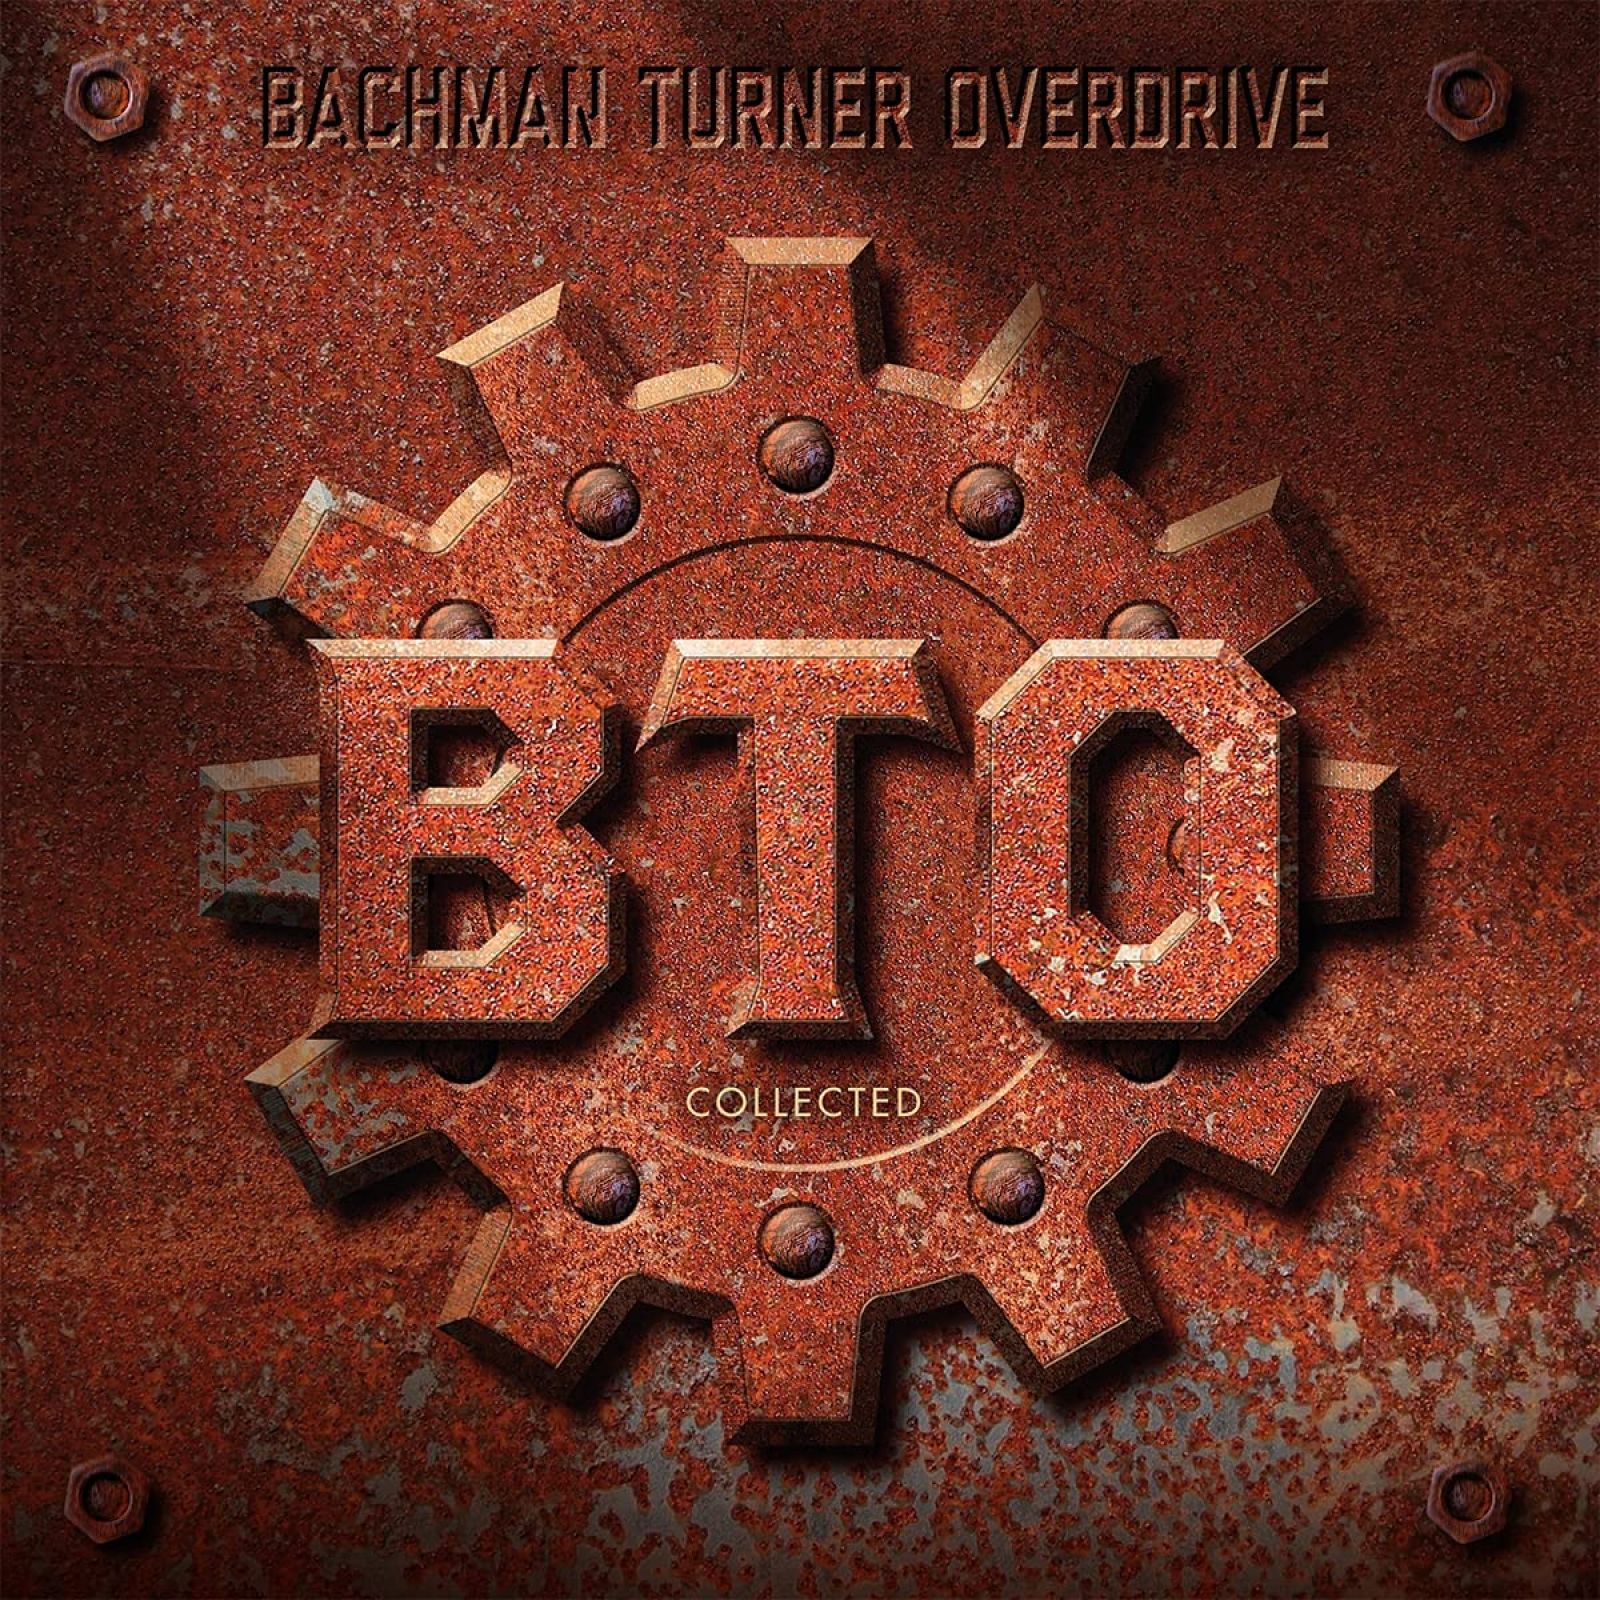 Виниловая пластинка Bachman Turner Overdrive, Collected: Greatest Songs (0600753911327) виниловая пластинка bachman turner overdrive – collected 2lp